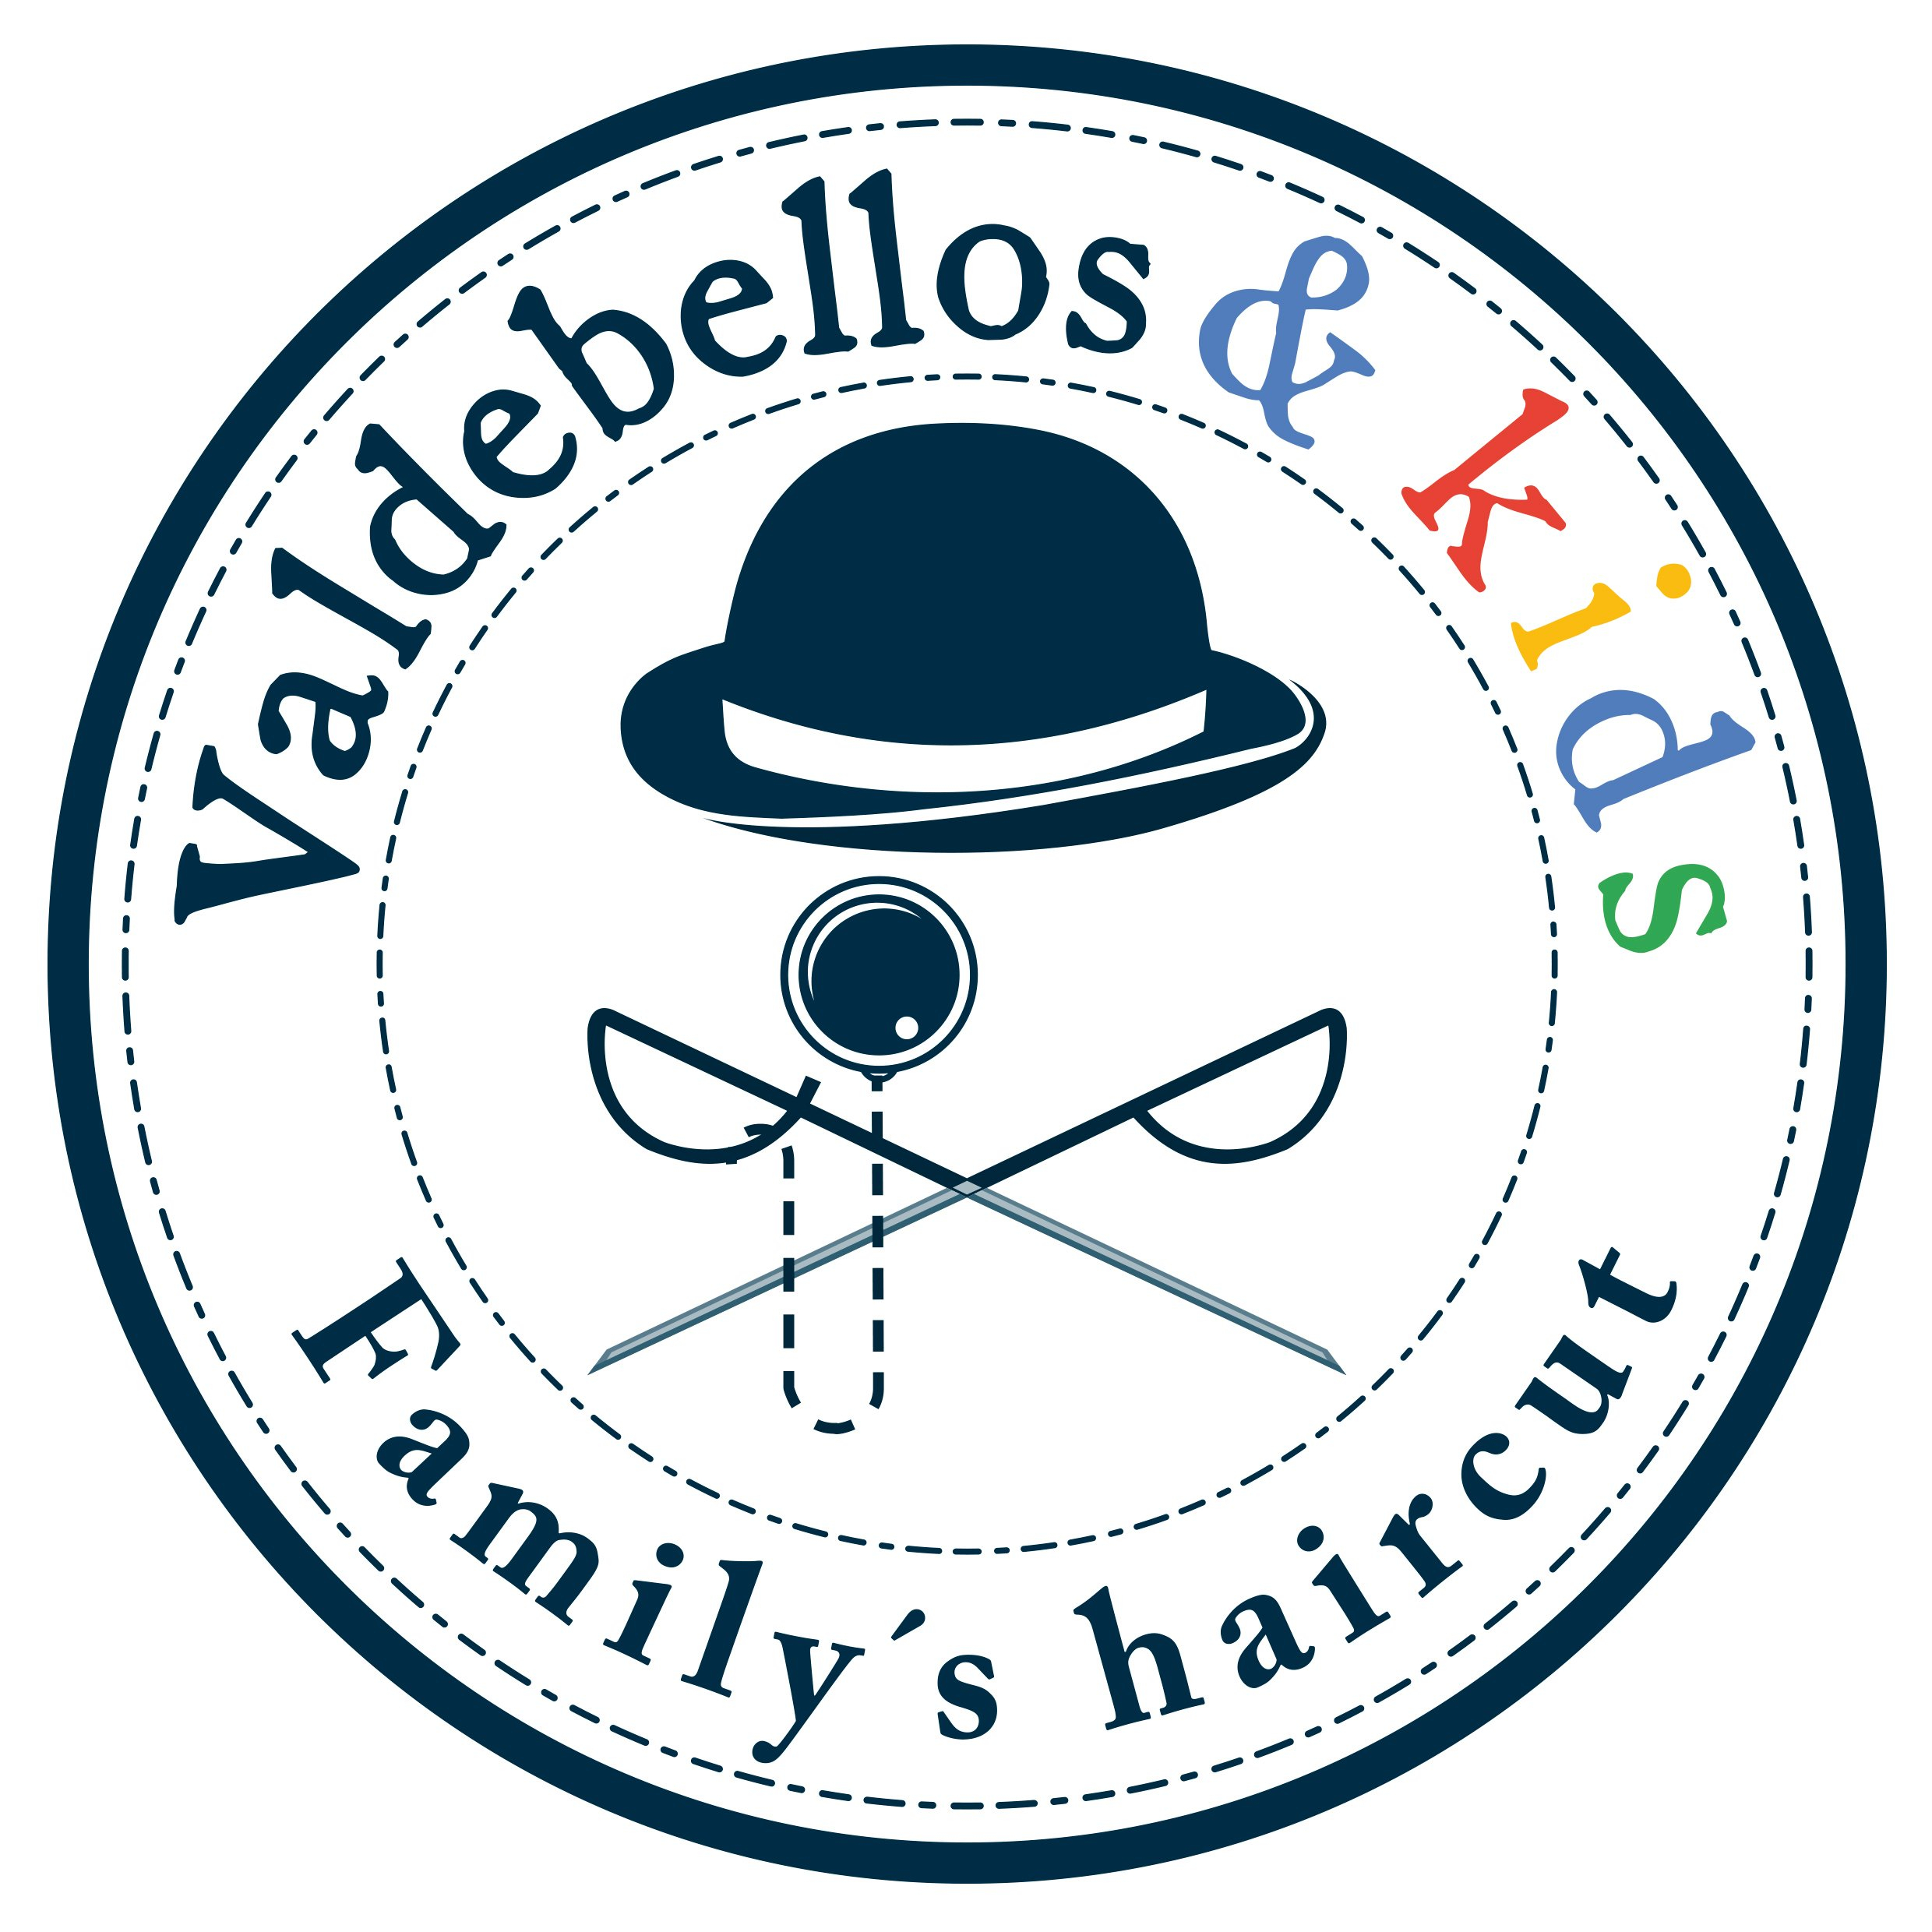 Valdebellos & Kids